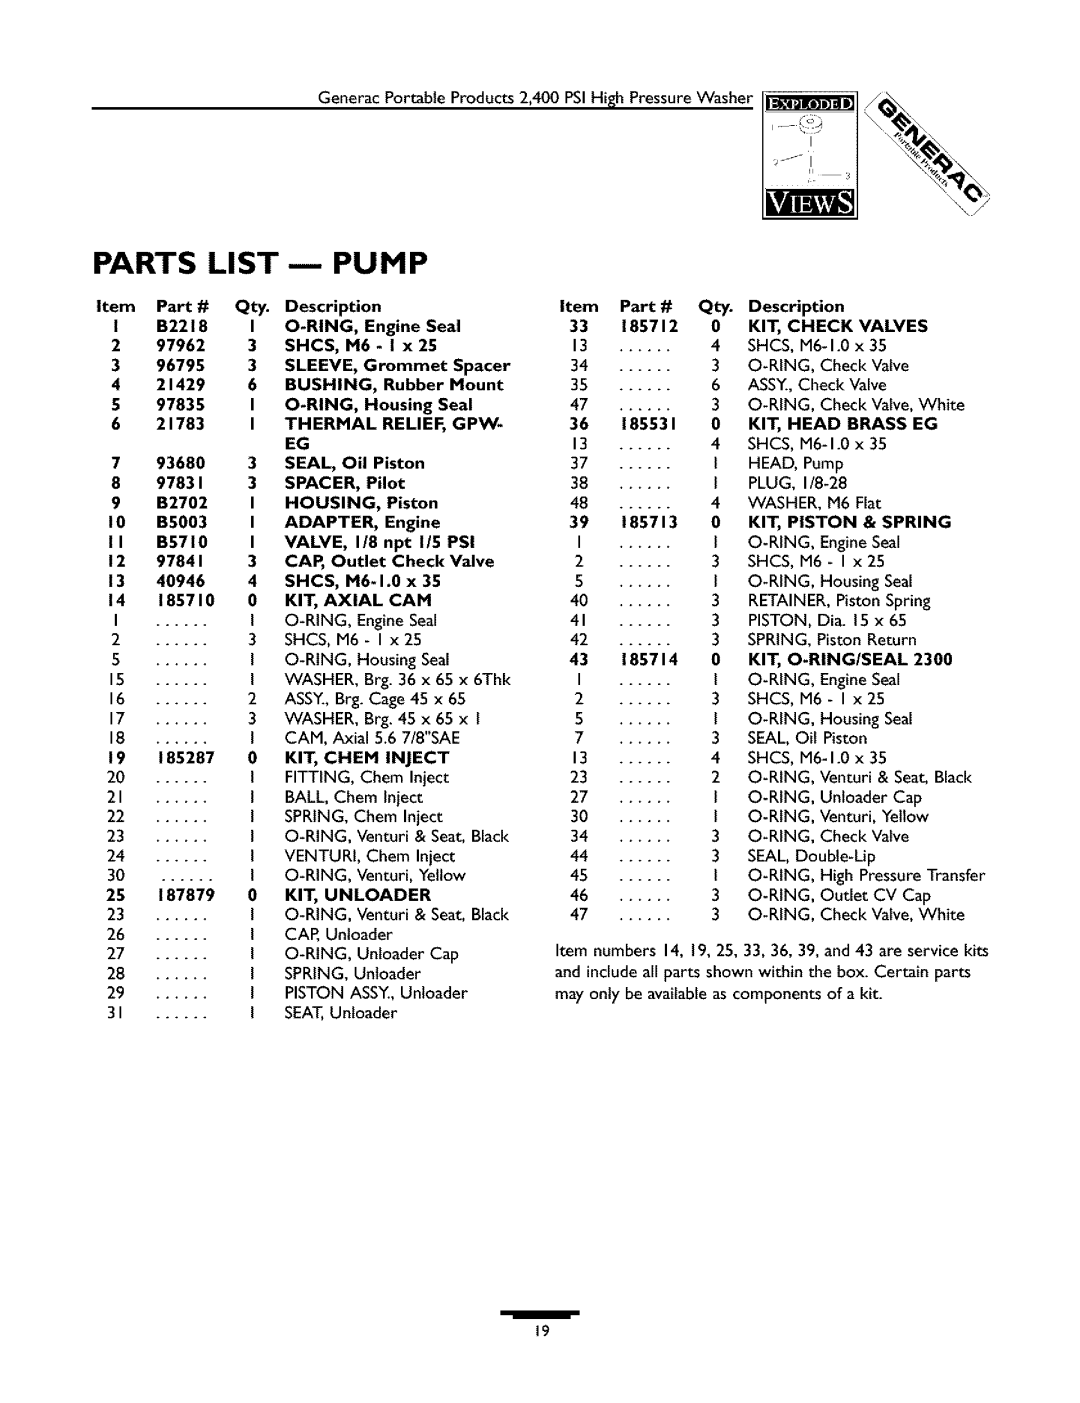 Generac 1537-0 owner manual Parts List, Pump, lSSTi4 